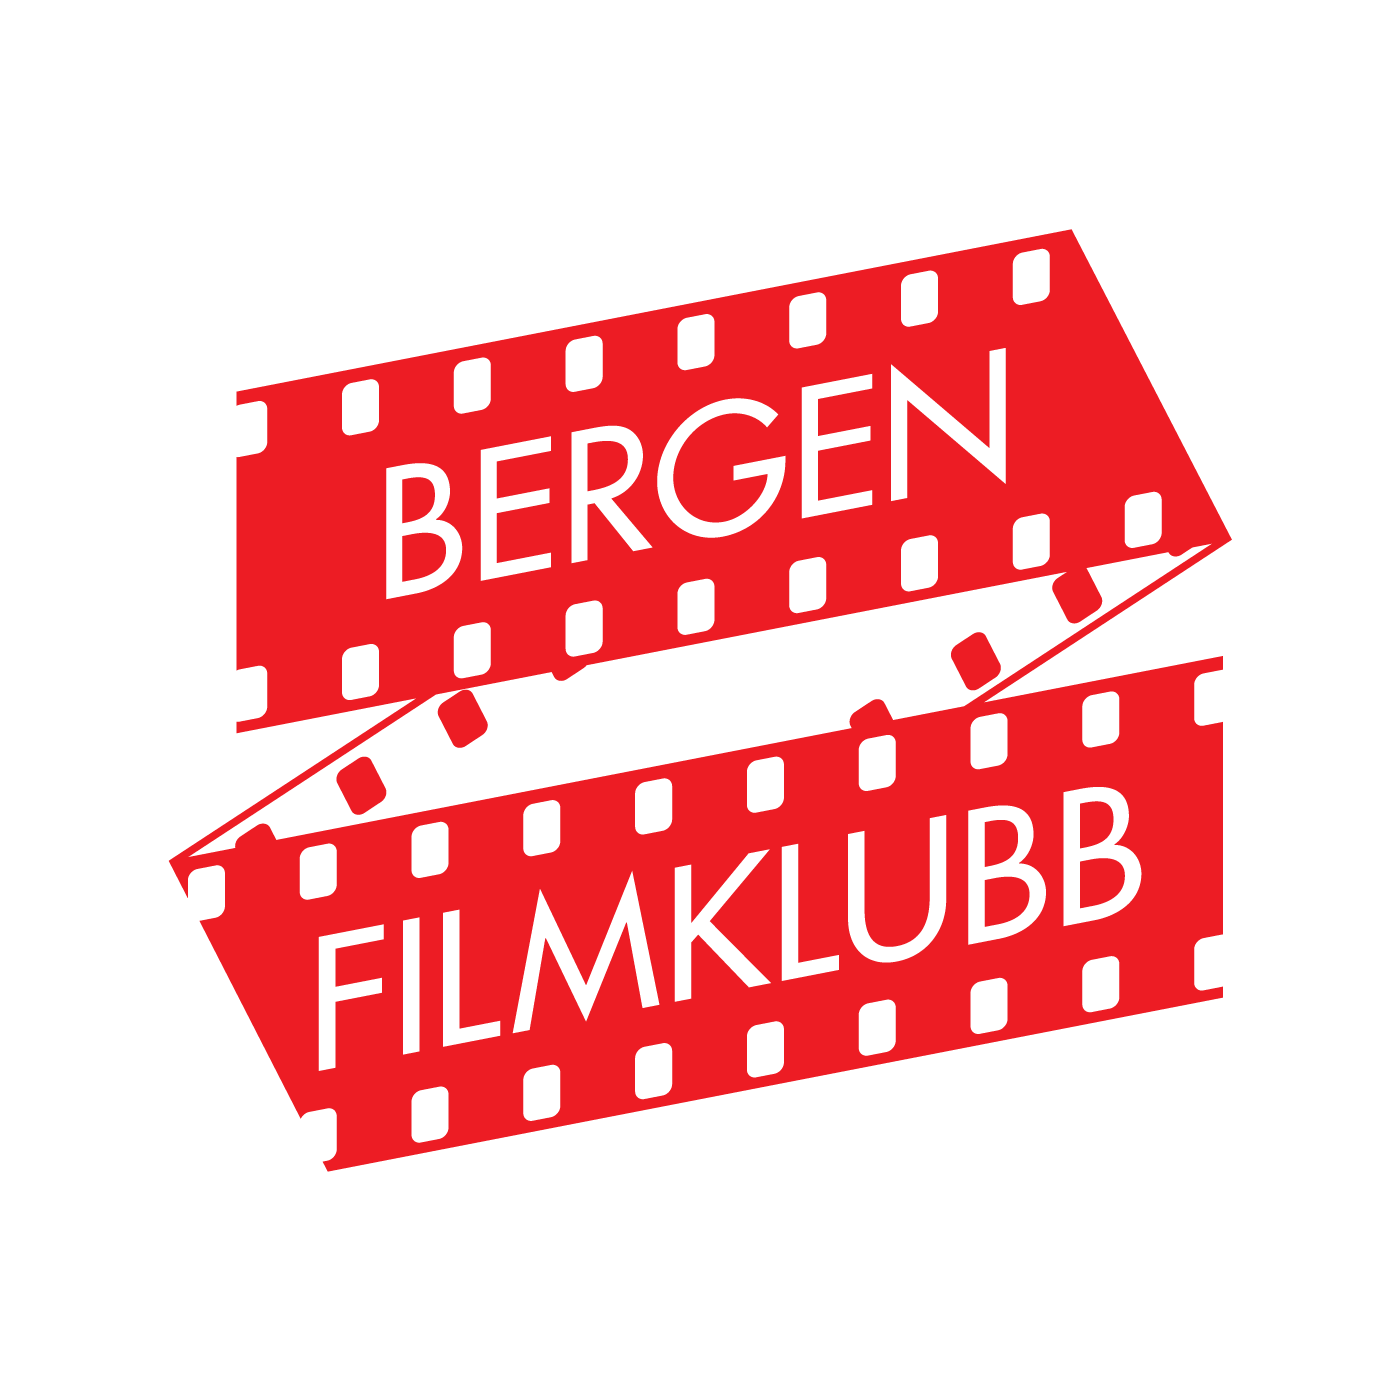 Bergen Film Klubb"